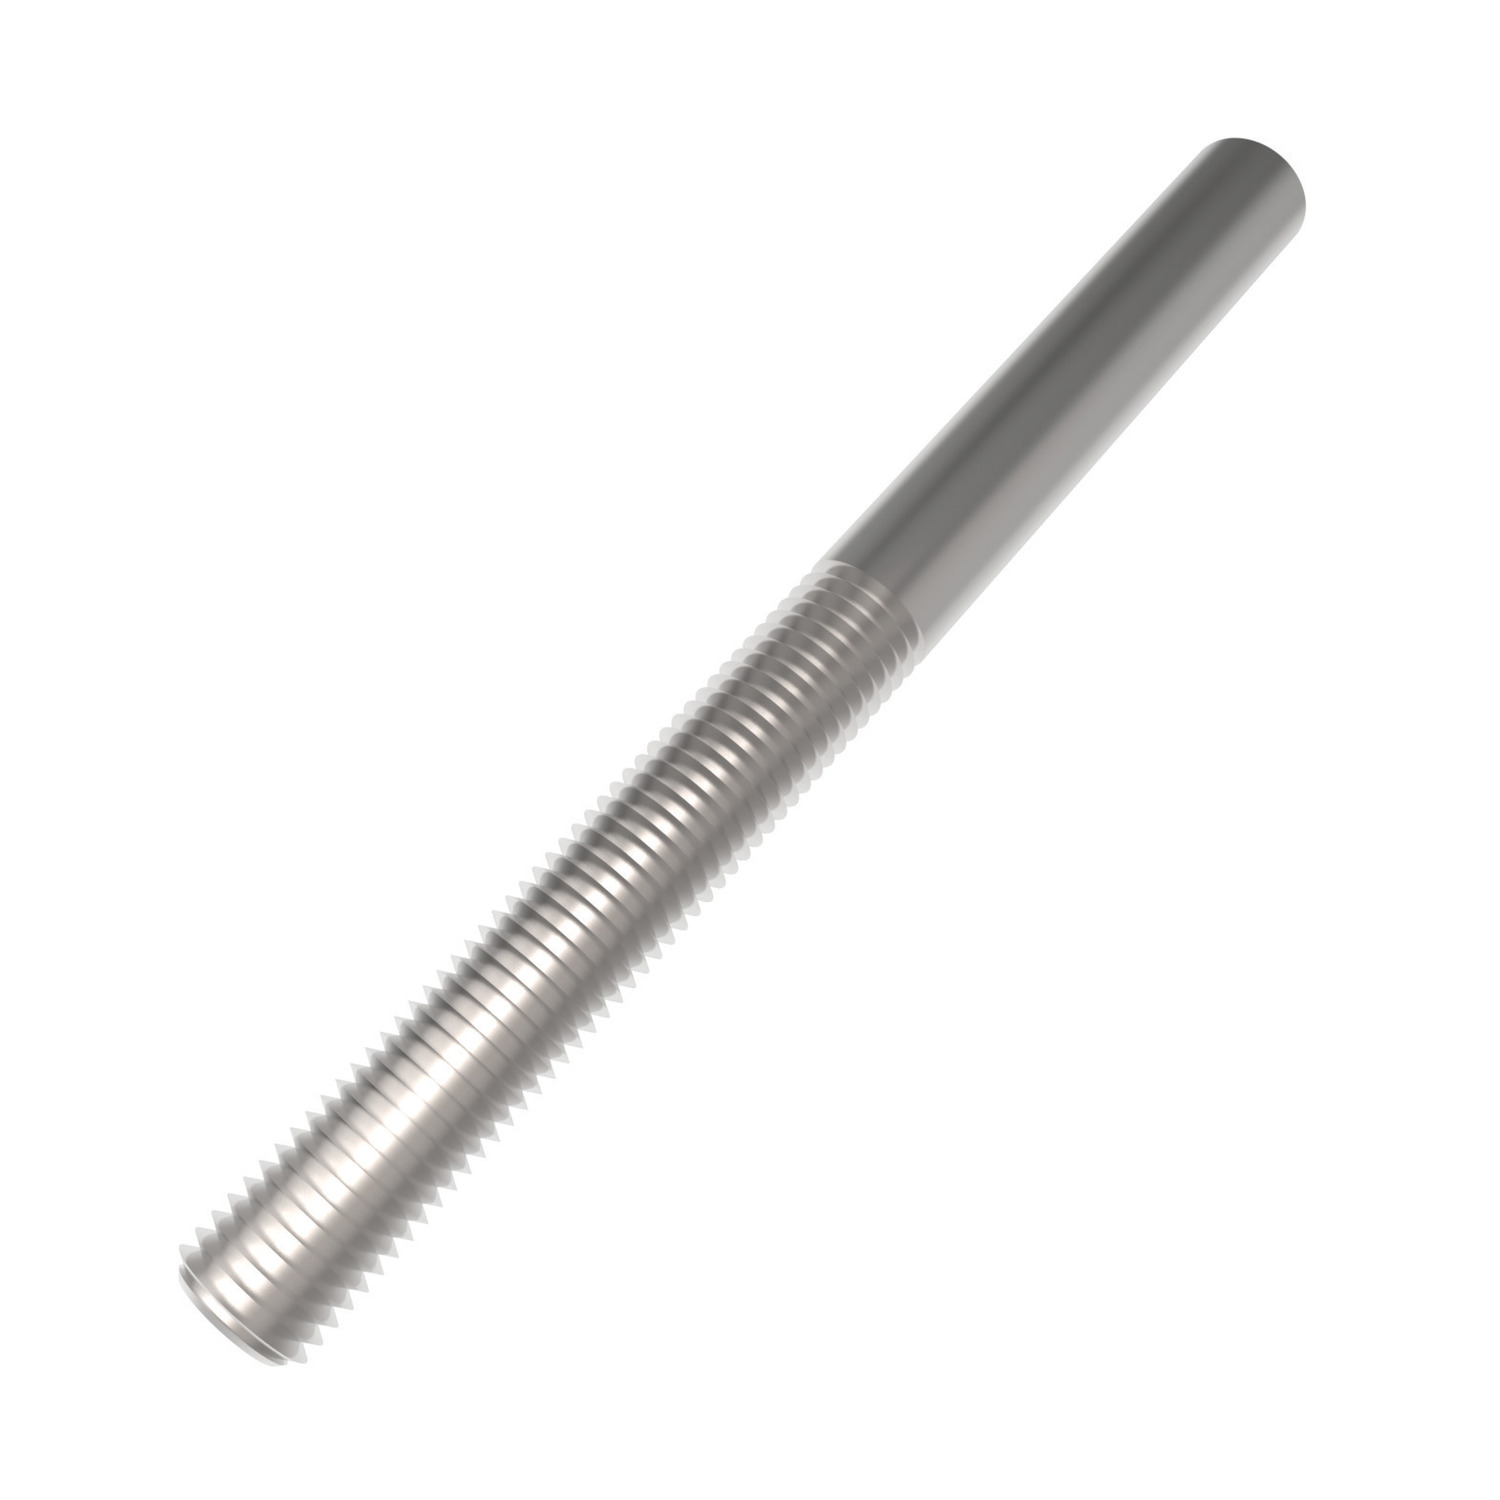 Product R3866, Welding Studs steel / 